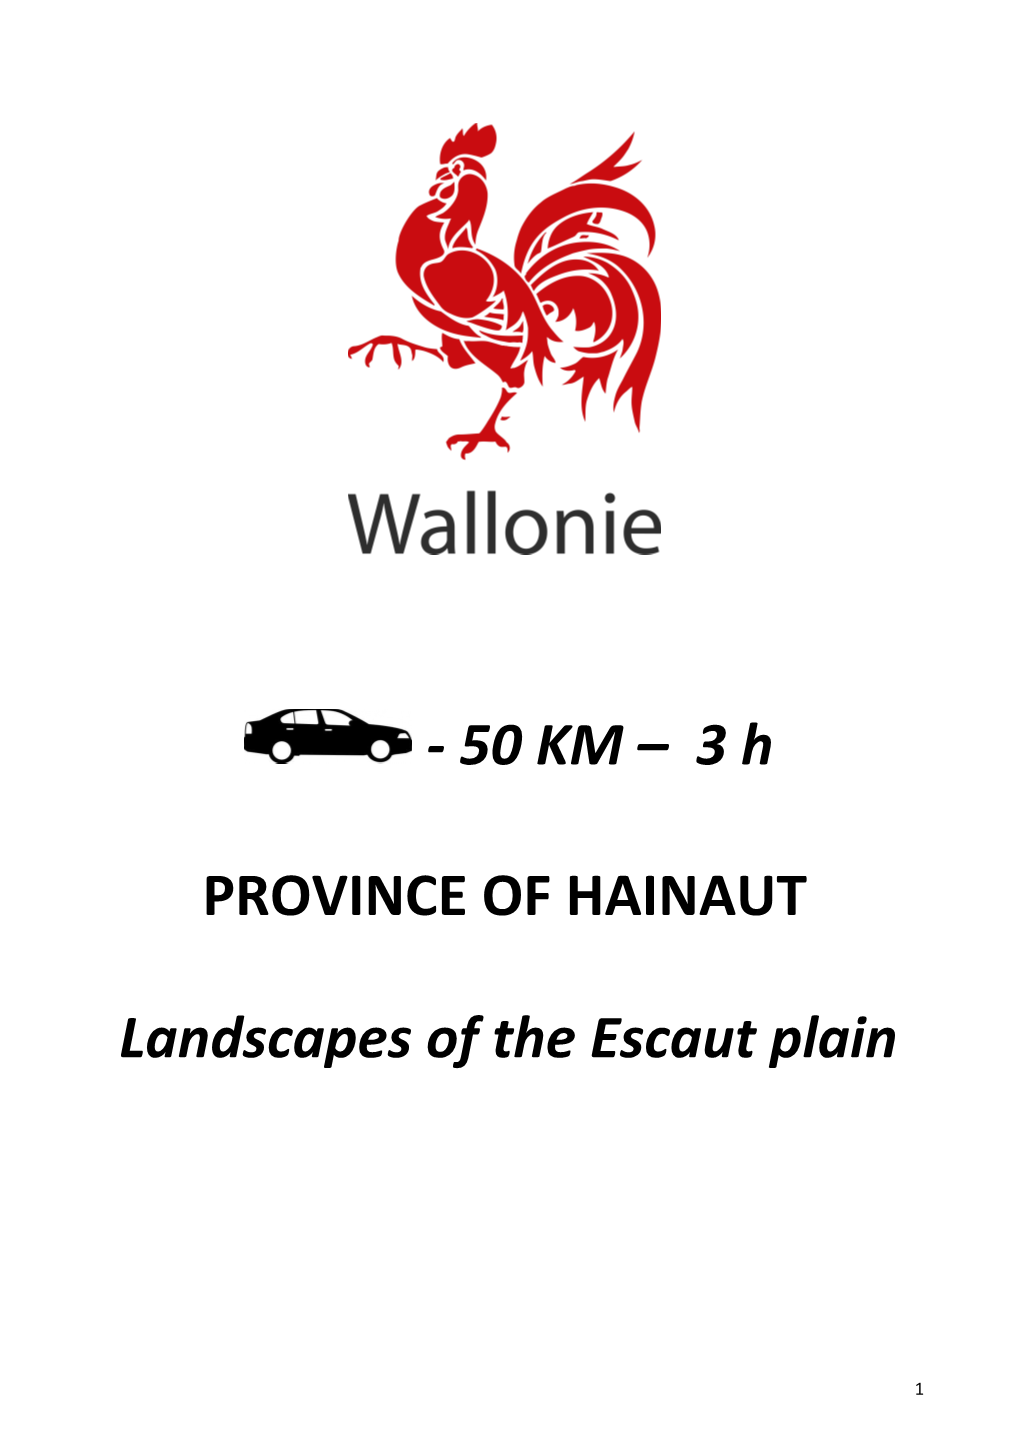 Province of Hainaut